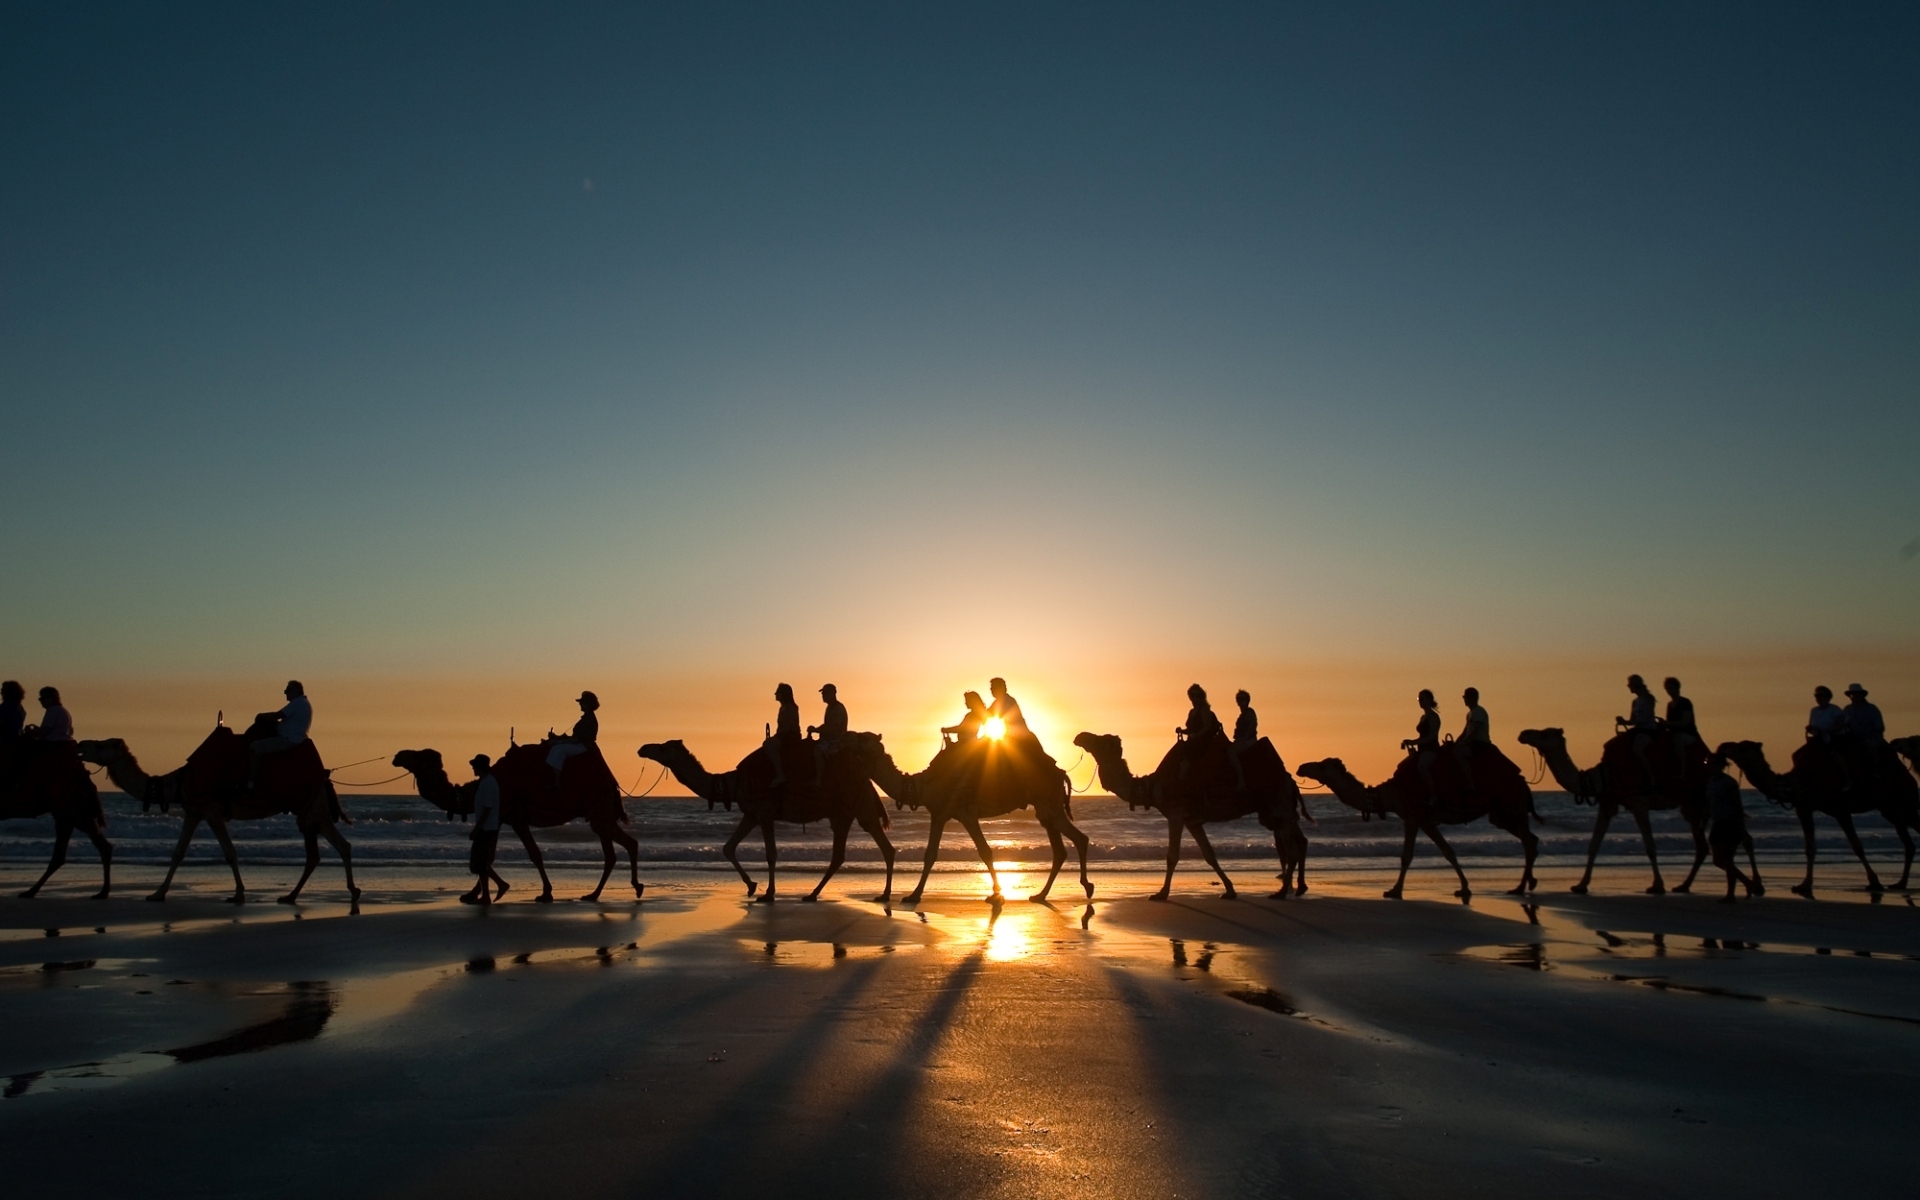 camel, photography, caravan, beach, camel caravan, people